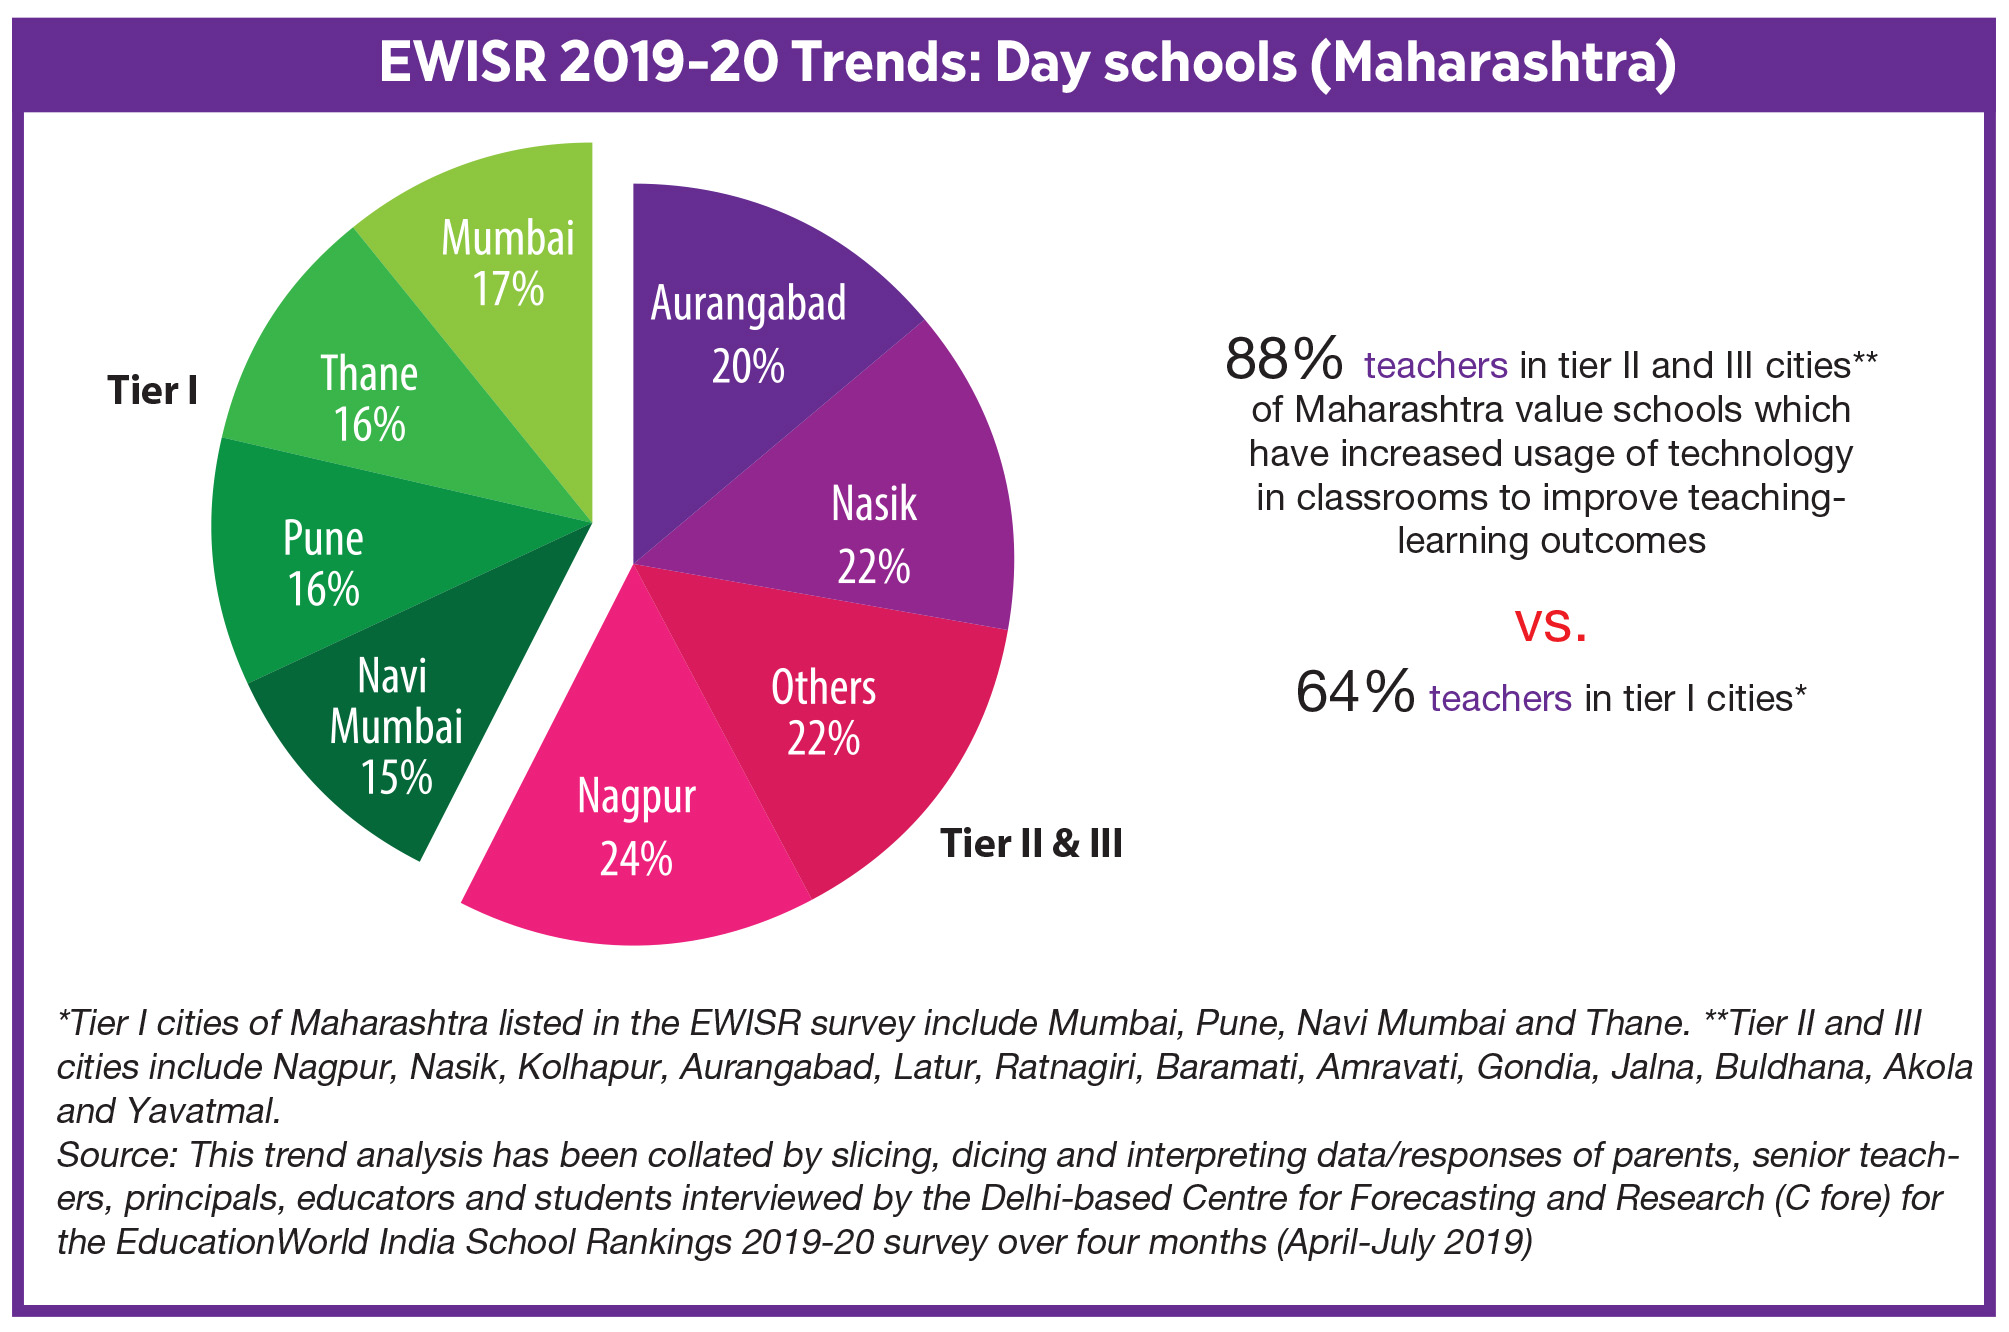 Top Schools of Maharashtra + Maharashtra Day schools trends